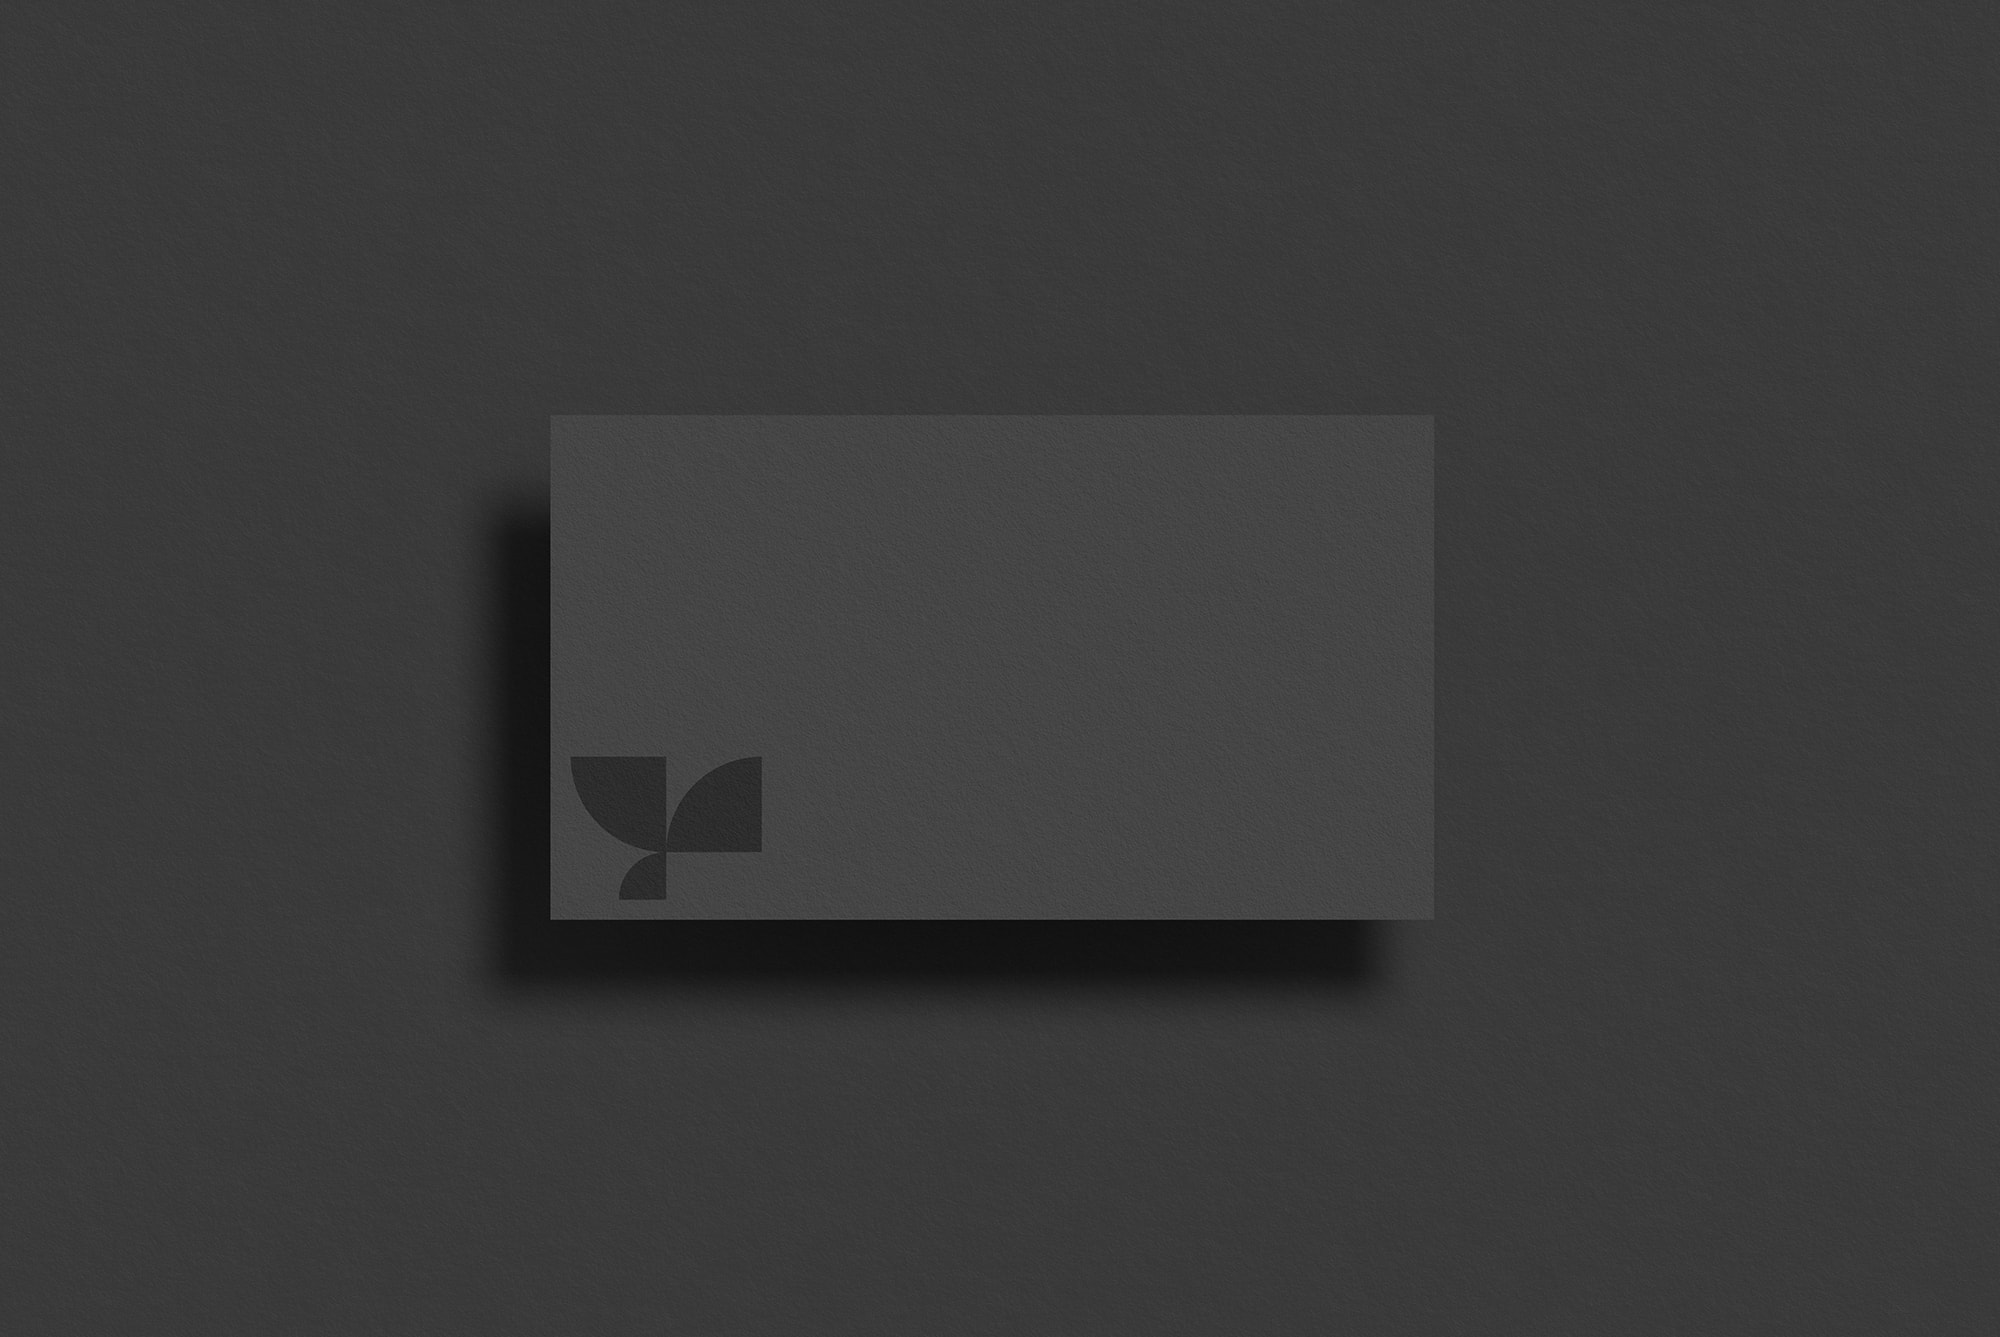 Elegant black business card mockup on dark background, minimalistic design, ideal for professional branding presentation.